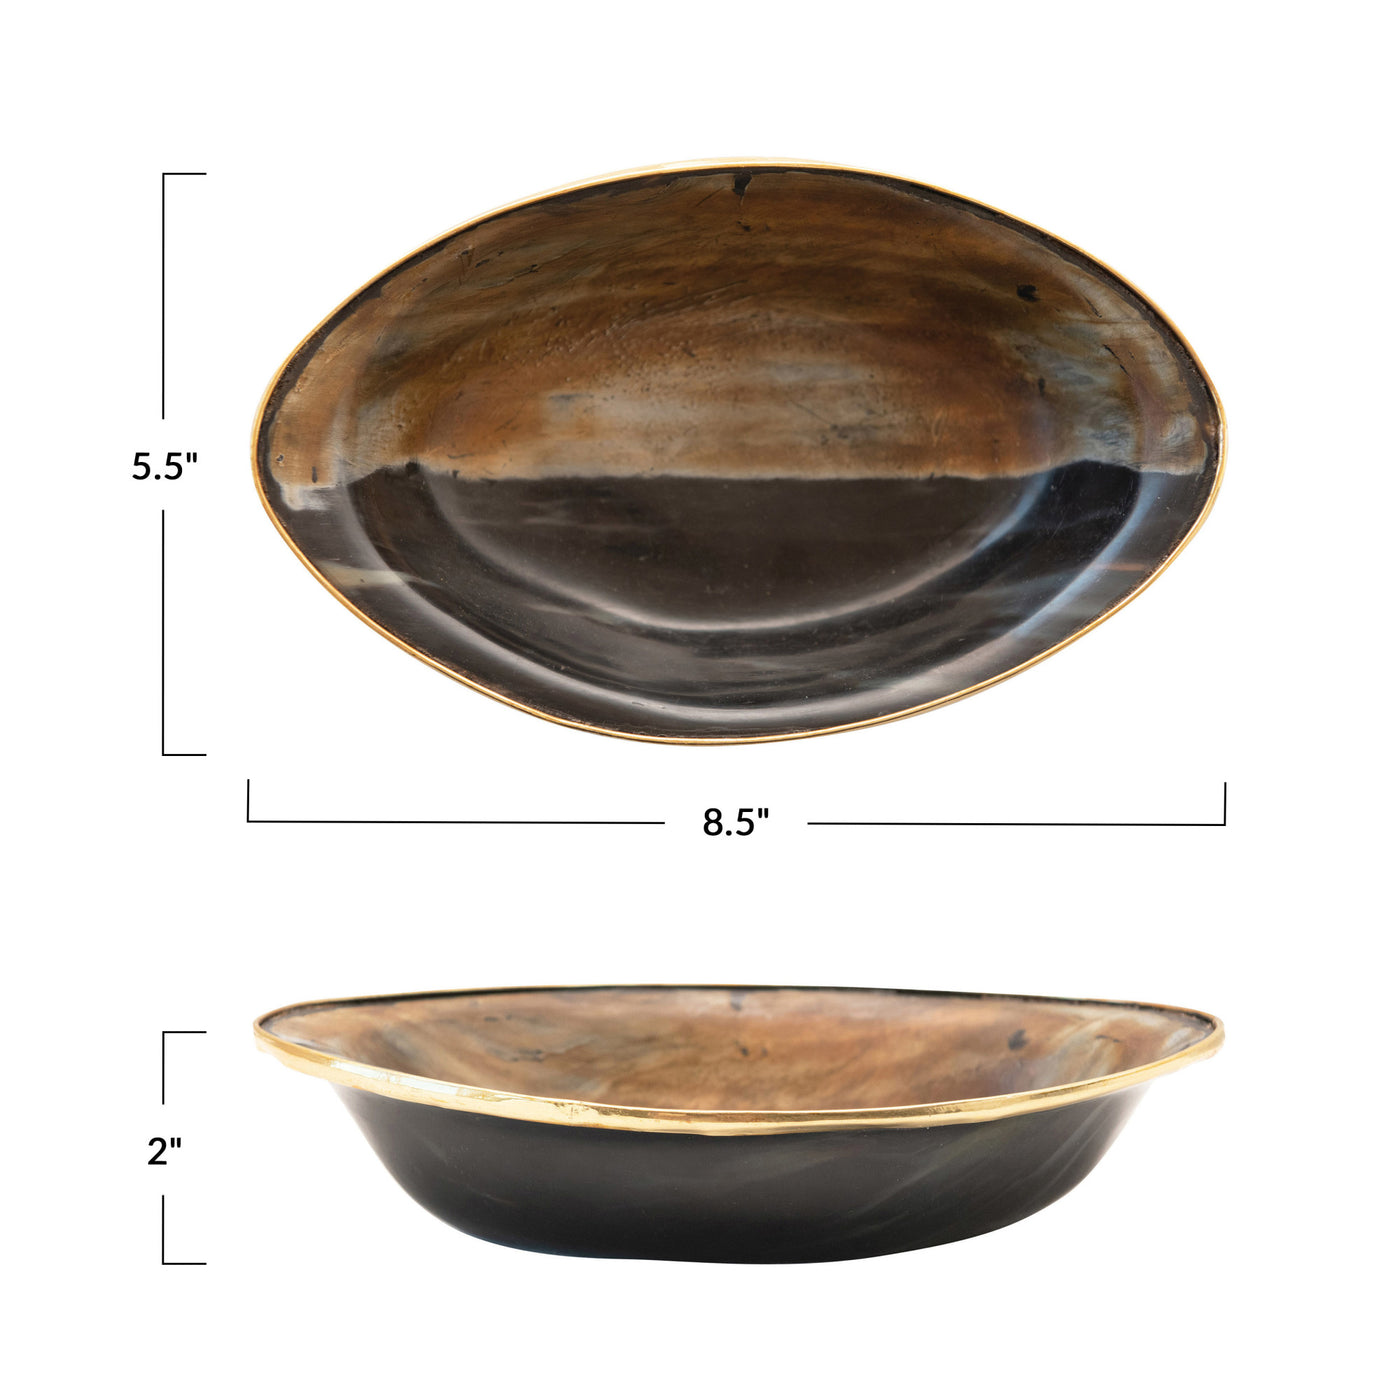 Bowl with Brass Rim